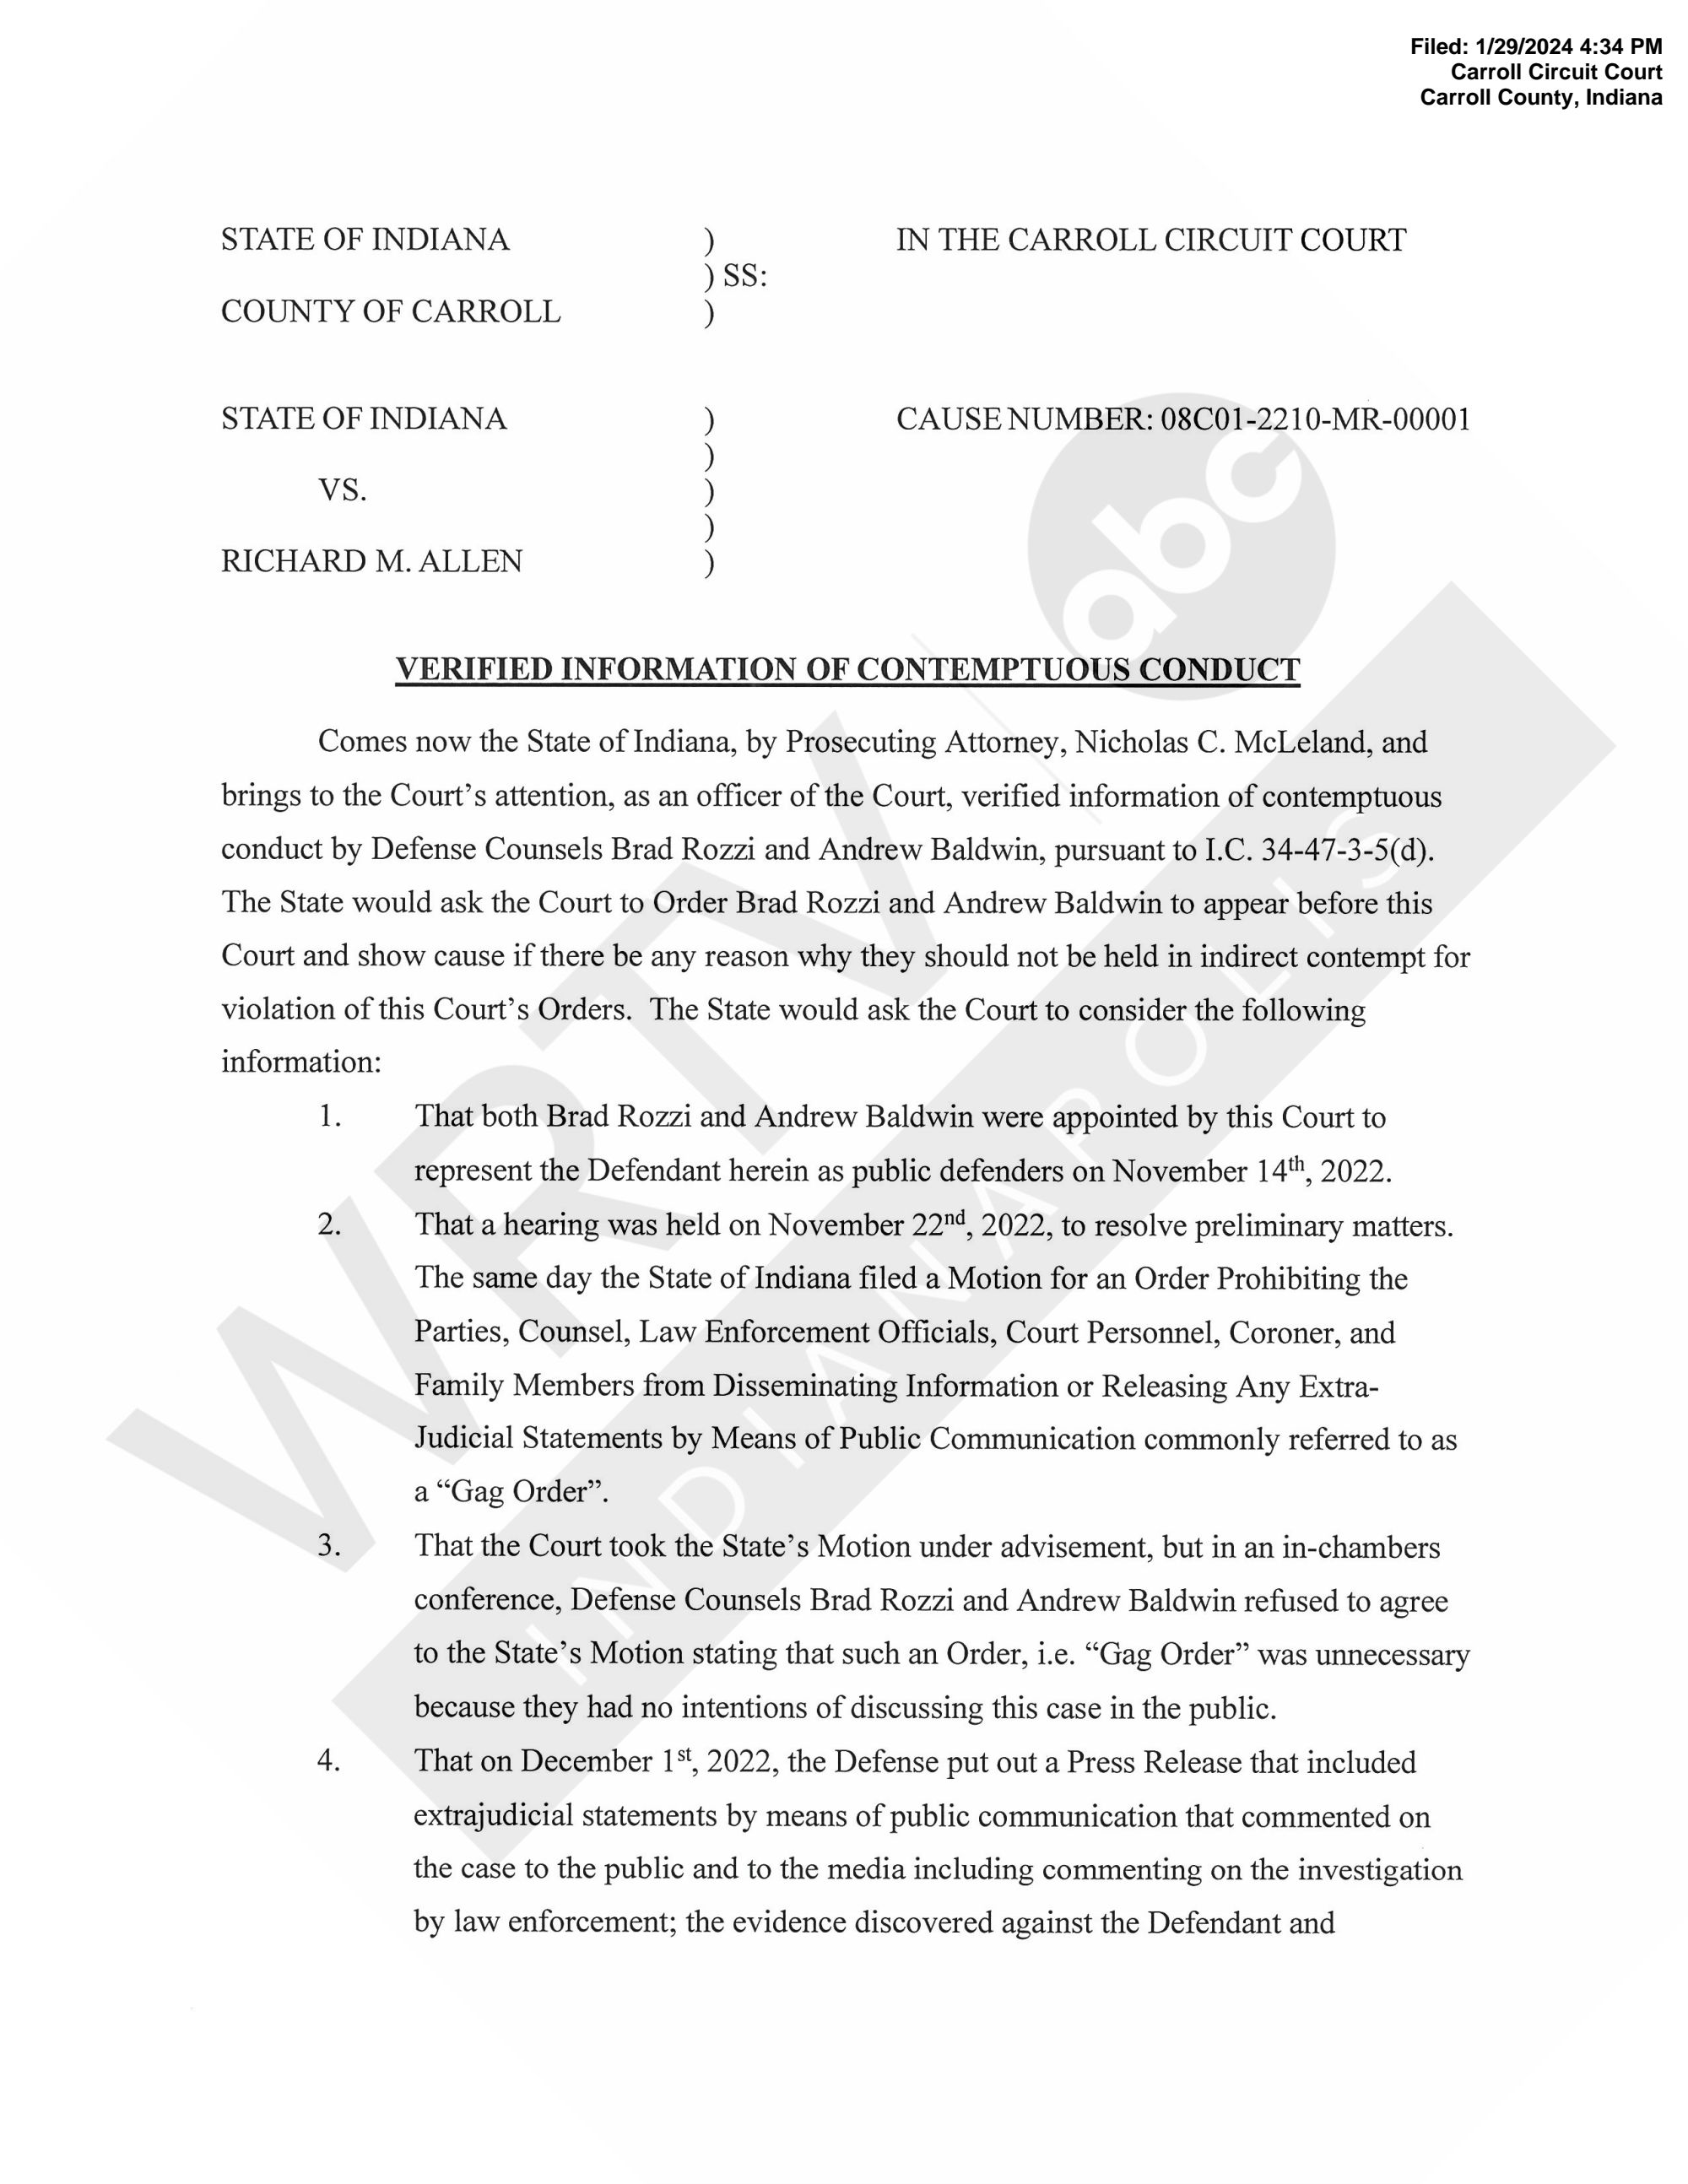 Page 1 of Allen Verified Info of Contempt Conduct WTRMRK